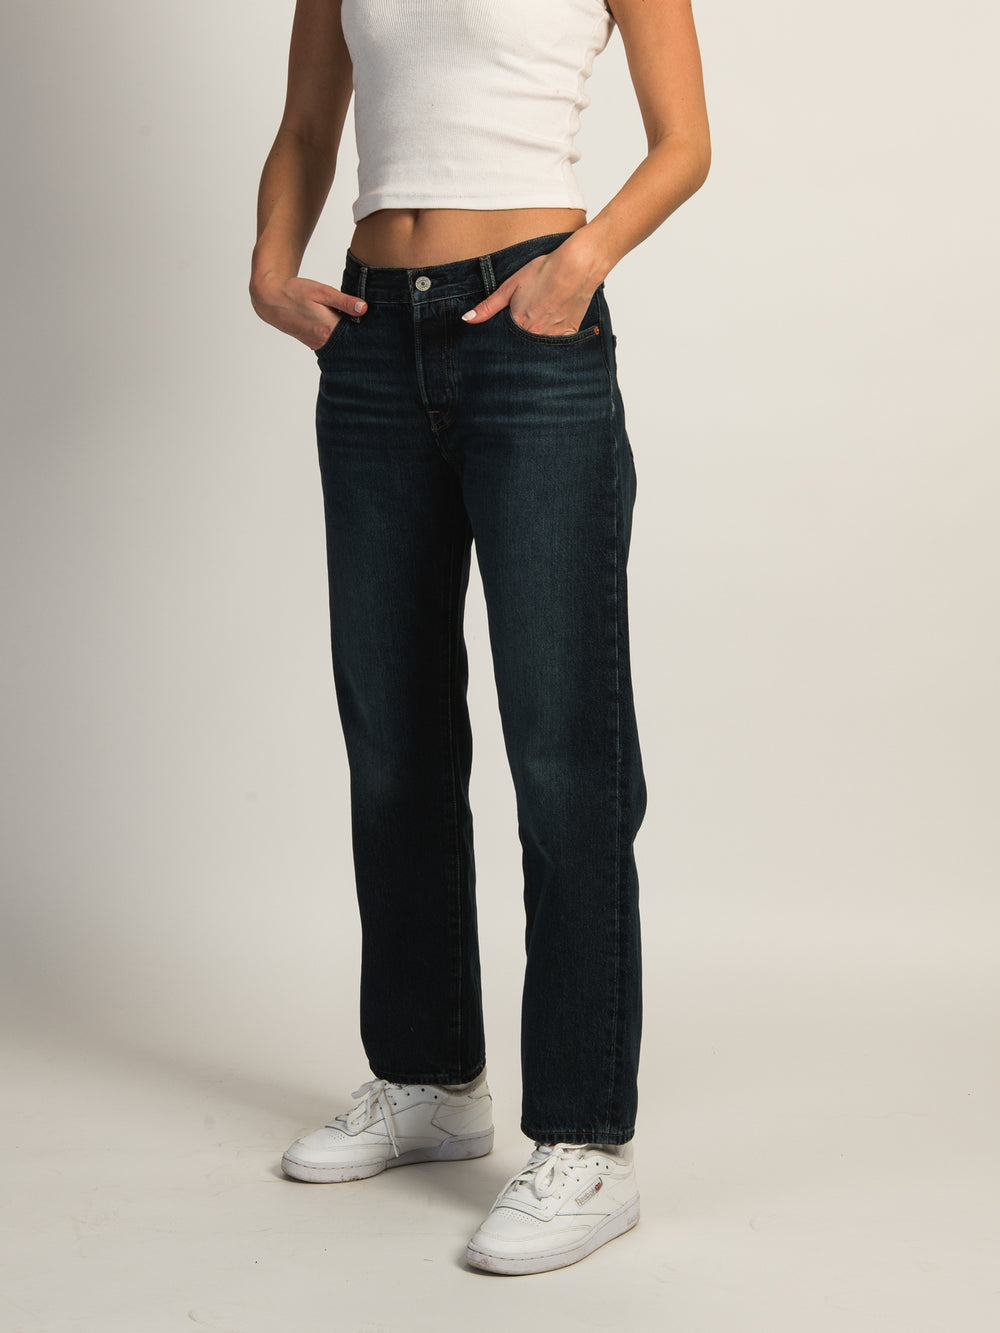 Levi's 501 90s Jeans